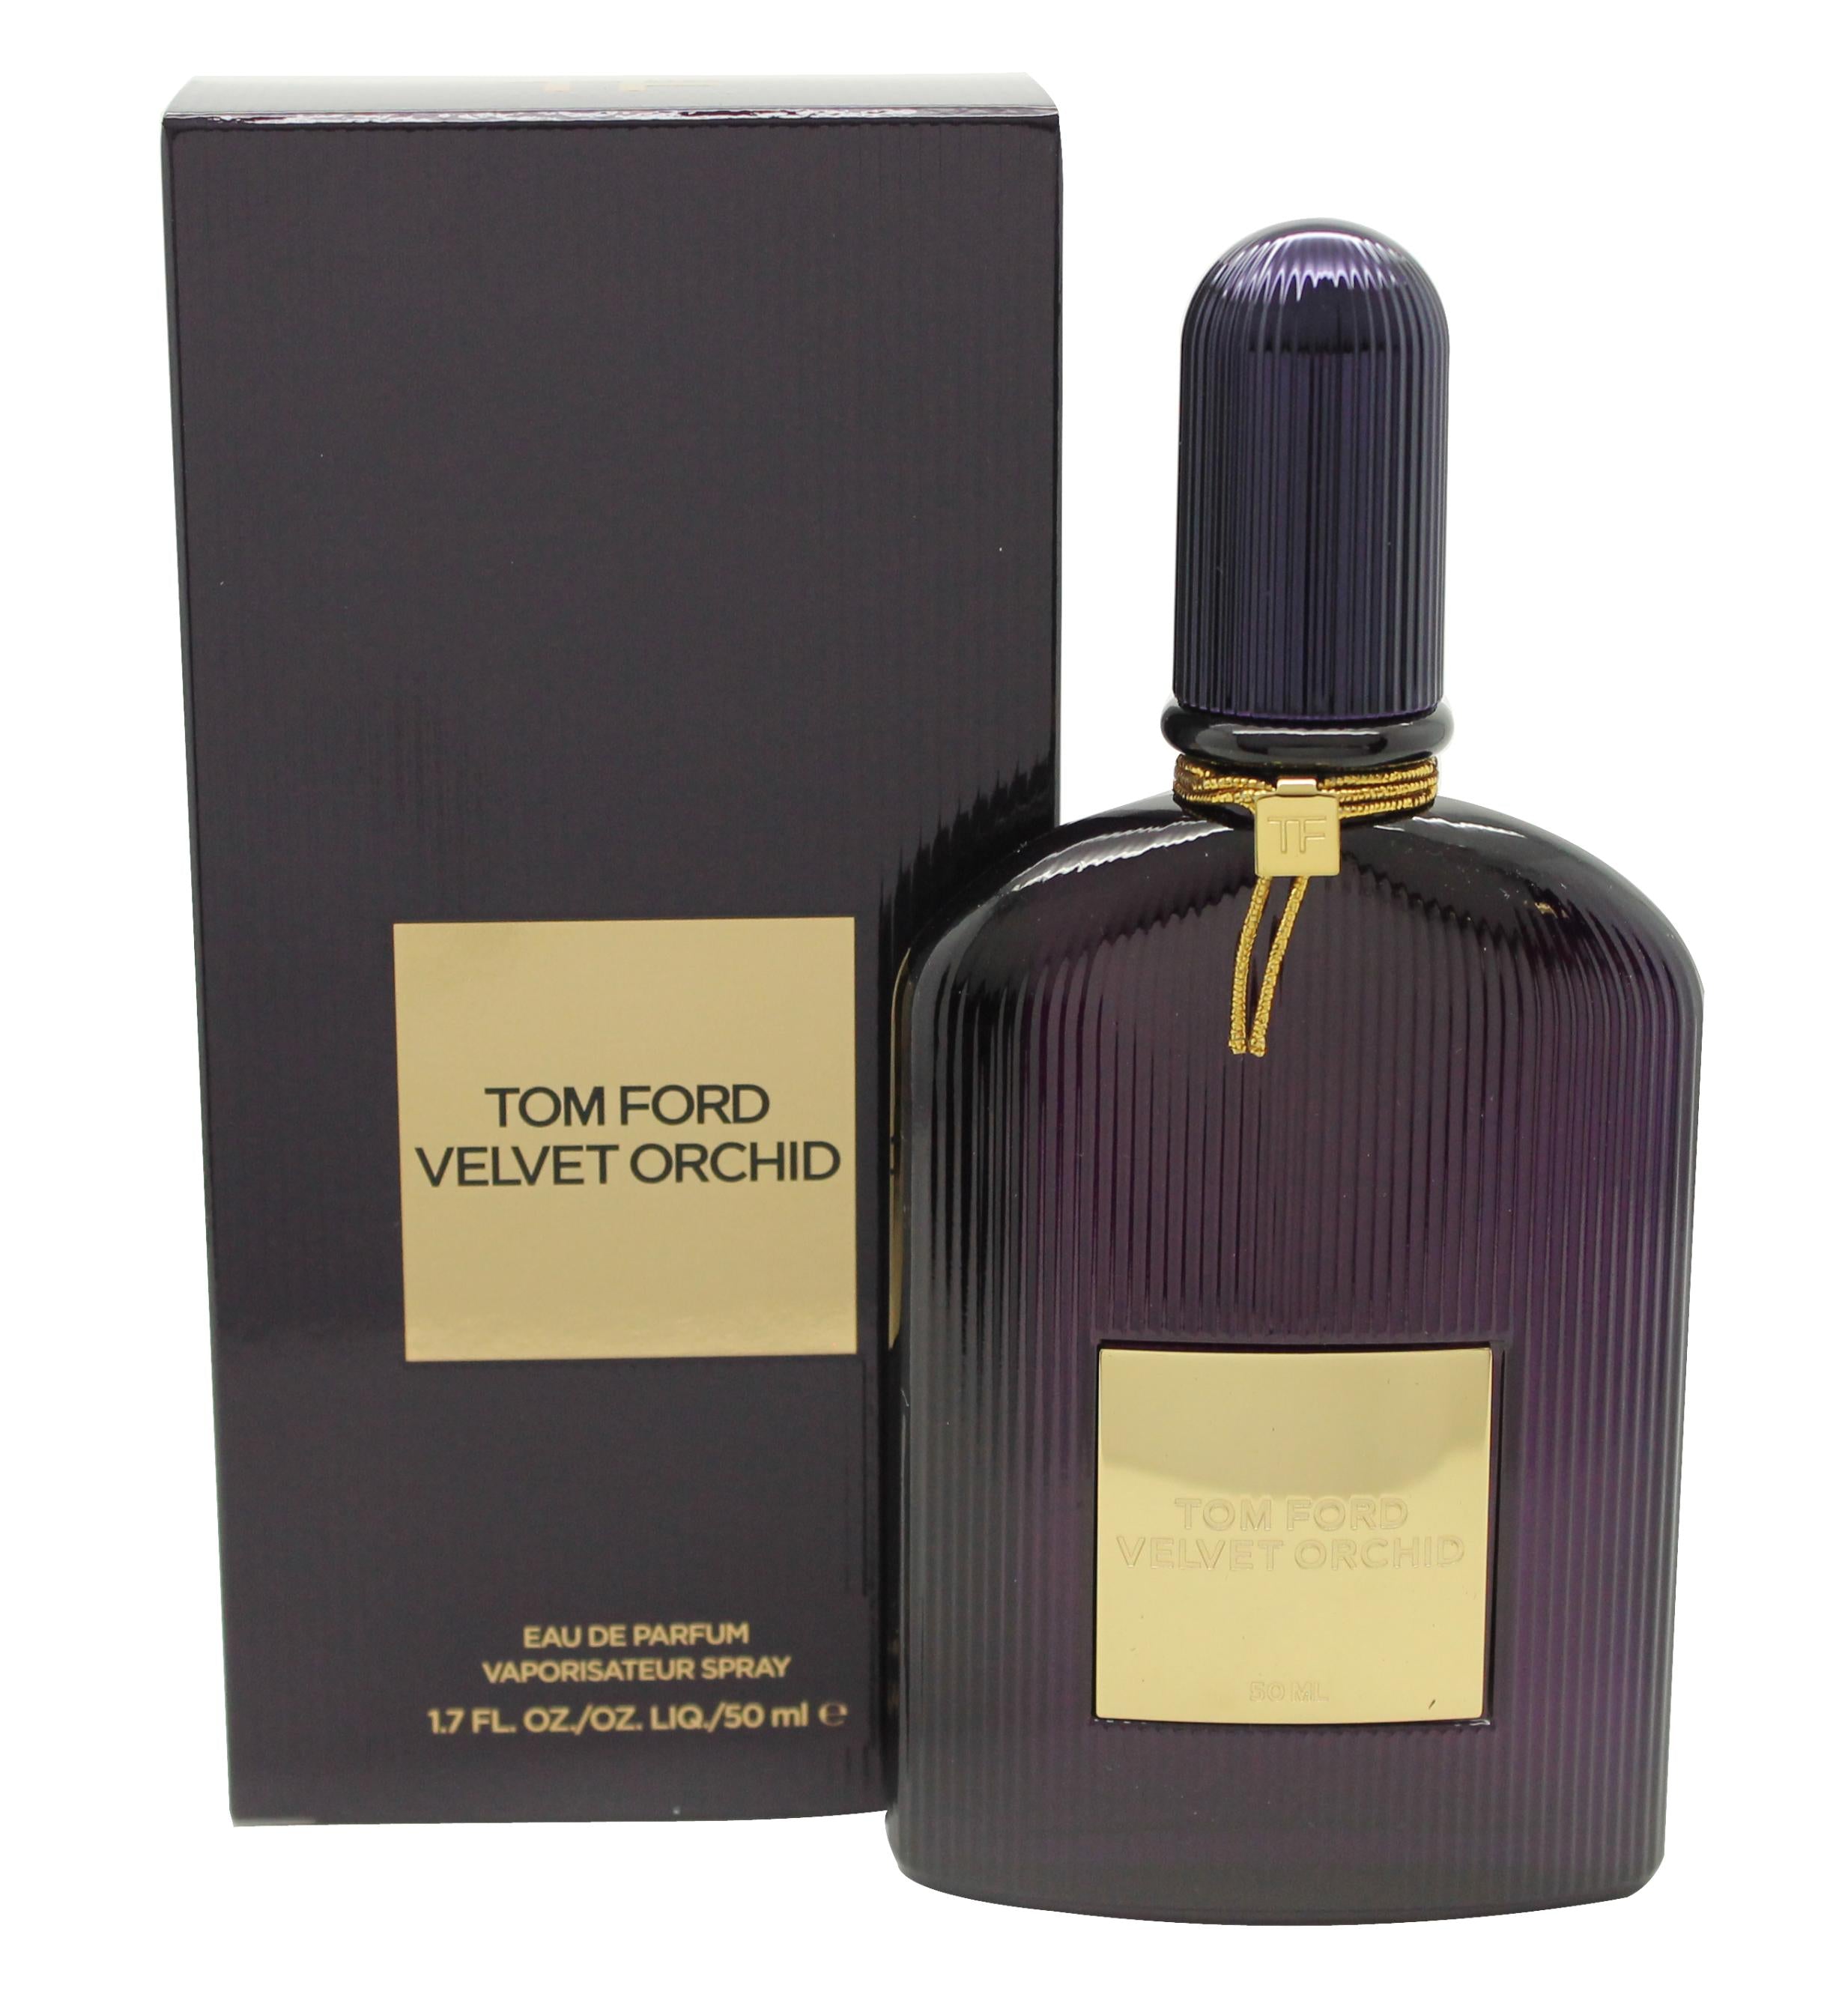 View Tom Ford Velvet Orchid Eau de Parfum 50ml Spray information